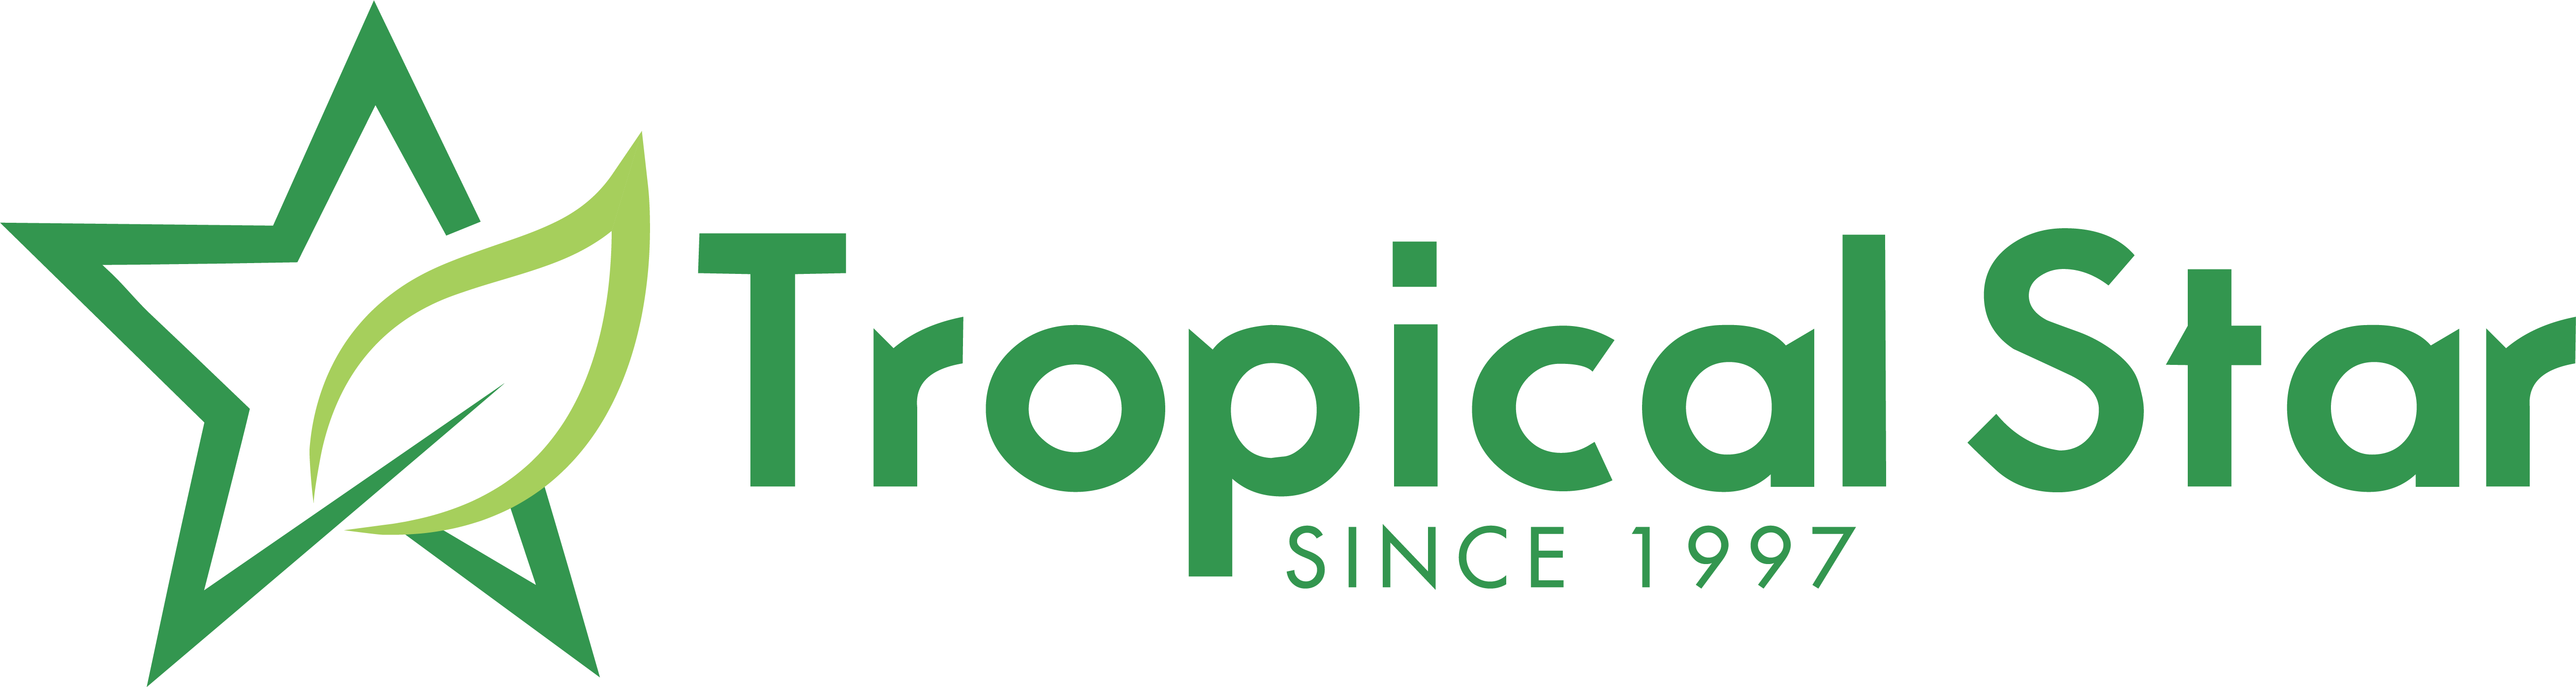 Tropical Star logo